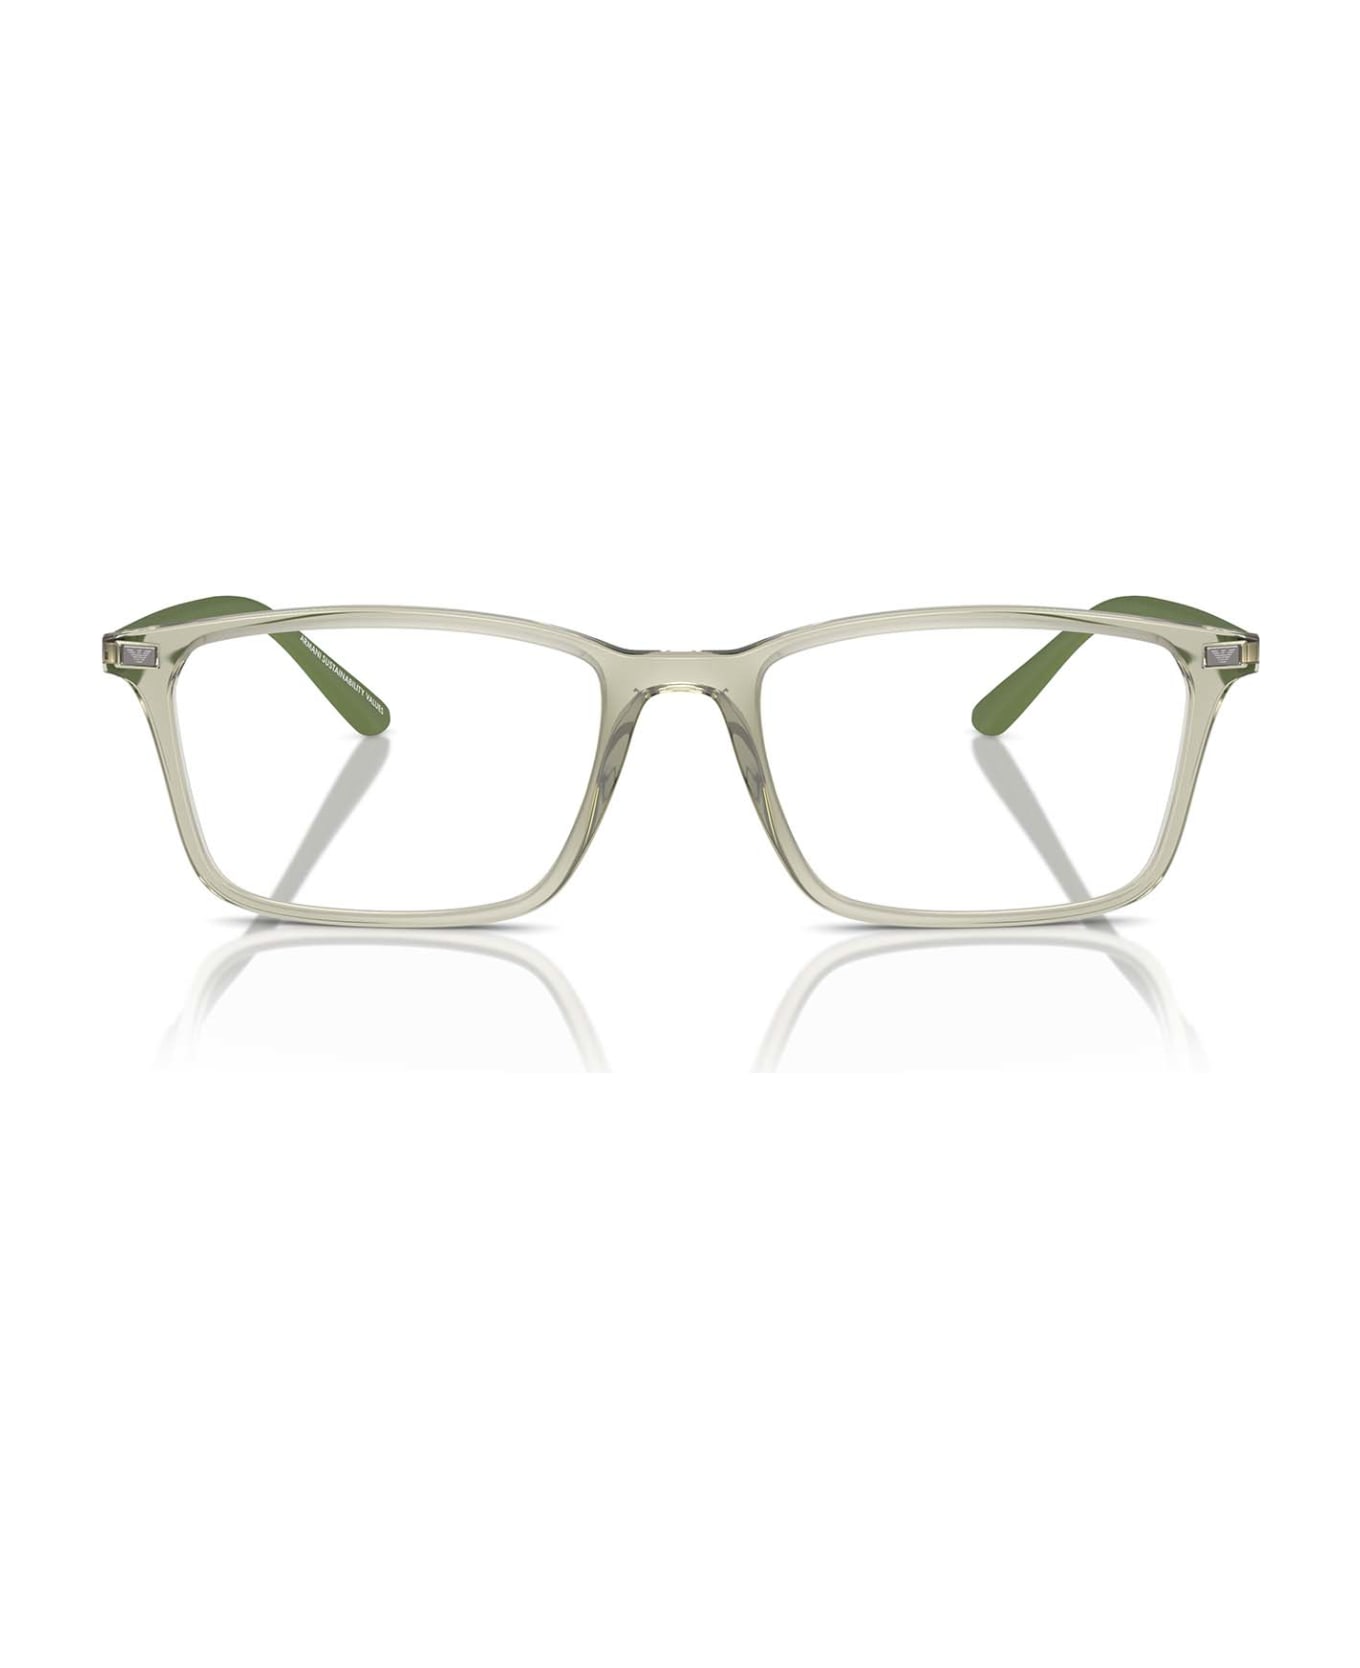 Emporio Armani Ea3237 Shiny Transparent Green Glasses - Shiny Transparent Green